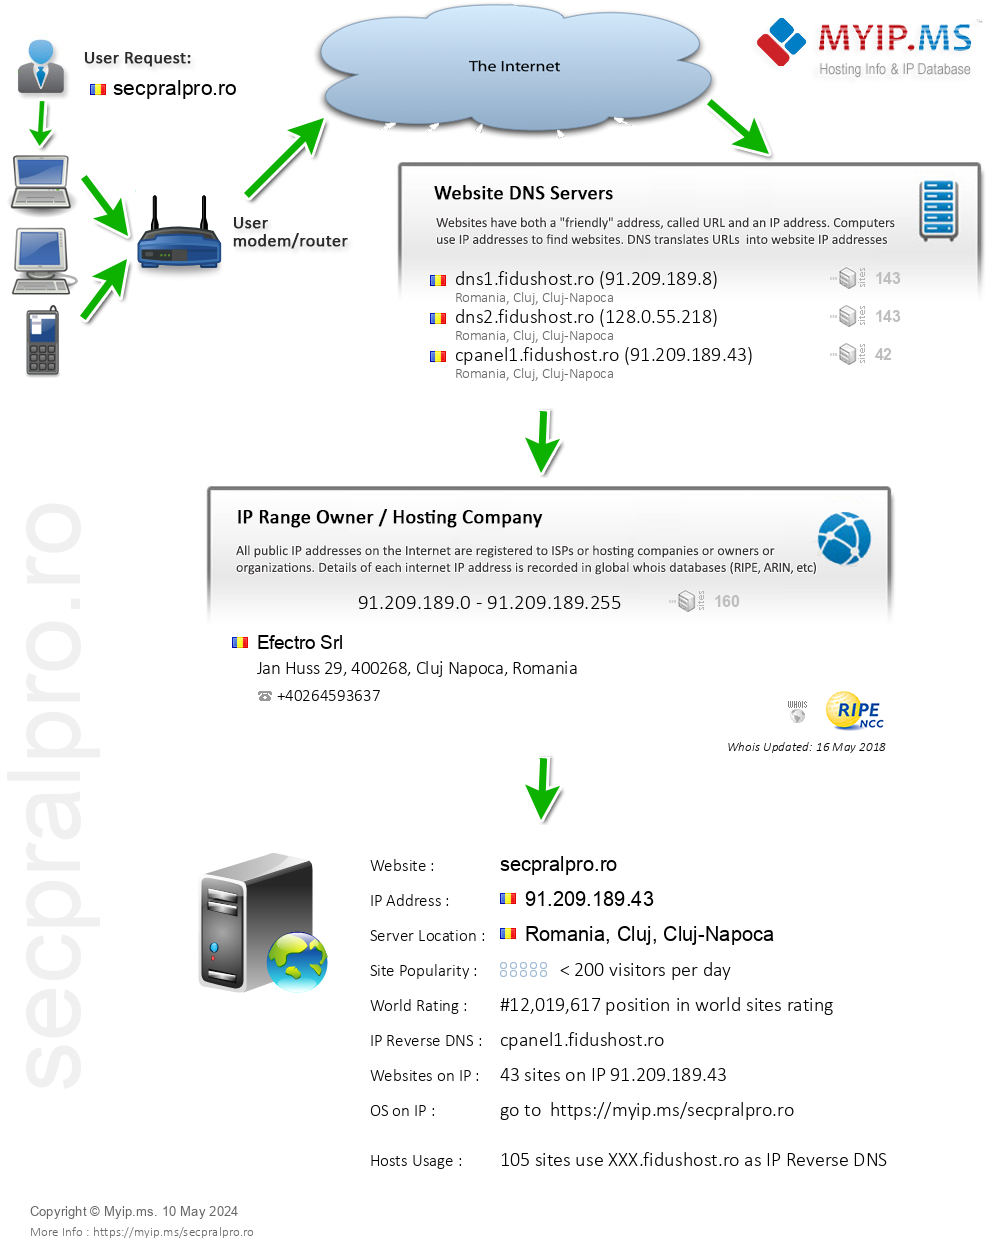 Secpralpro.ro - Website Hosting Visual IP Diagram